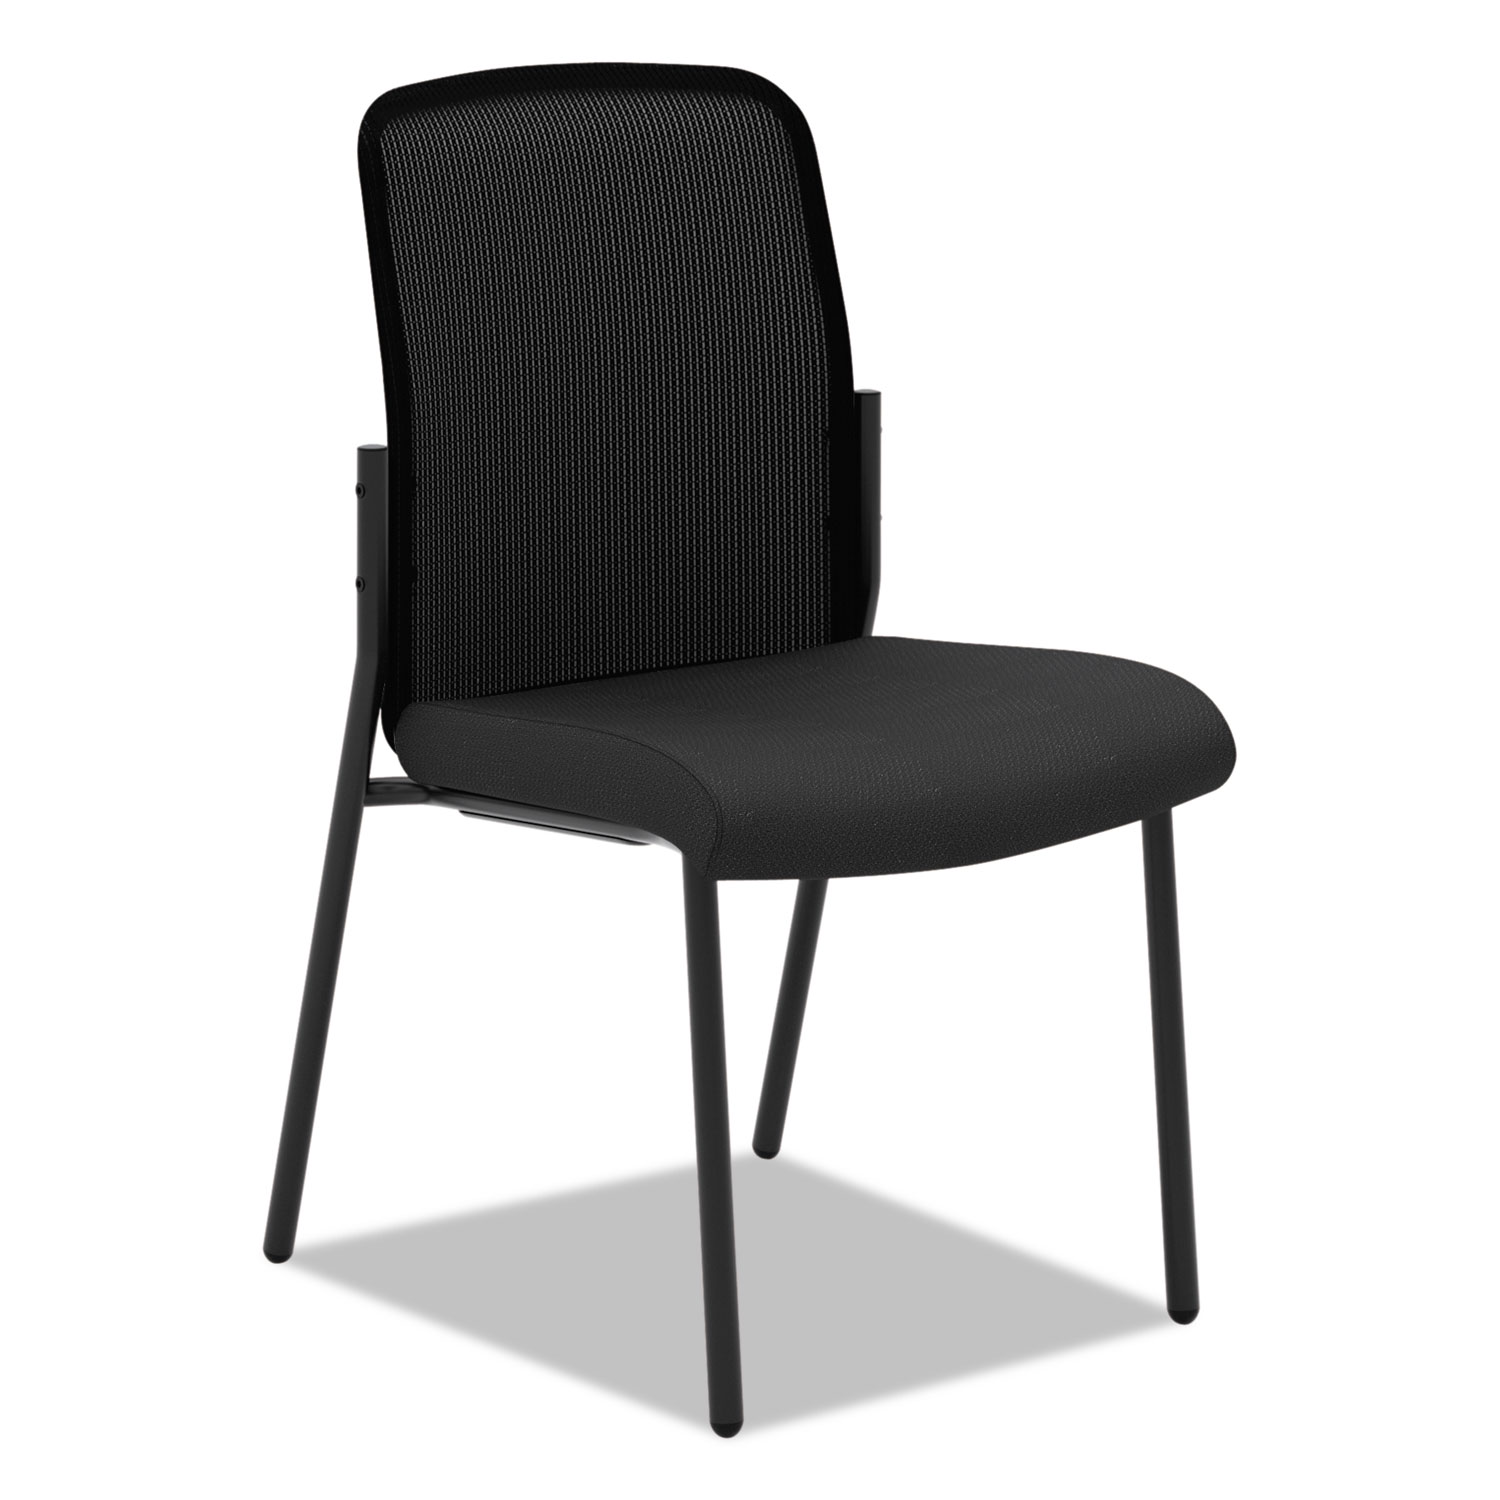 VL508 Mesh Back Multi-Purpose Chair, Black